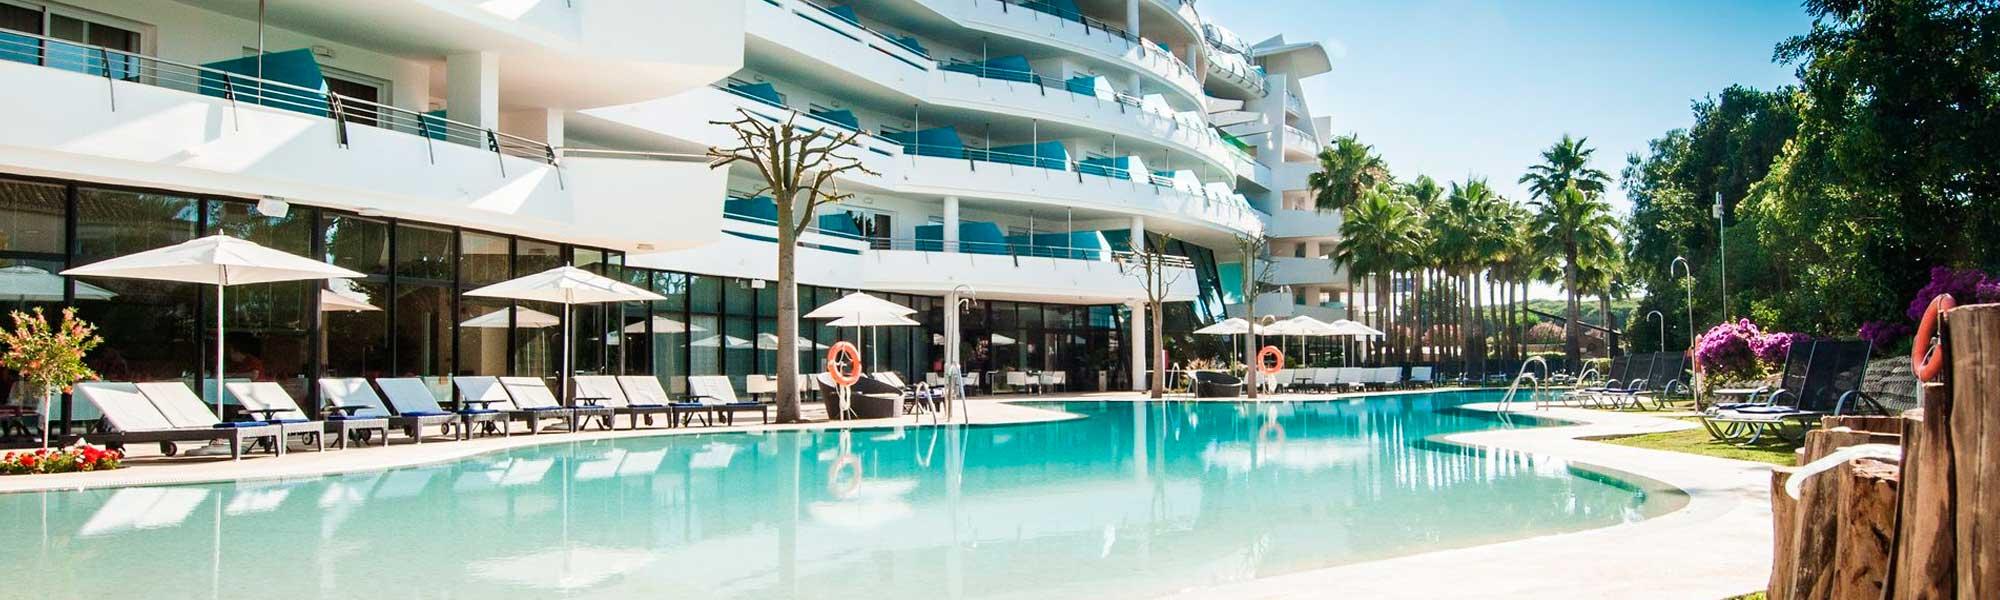 The Senator Banus Spa Hotel's impressive hotel situated in striking Costa Del Sol.